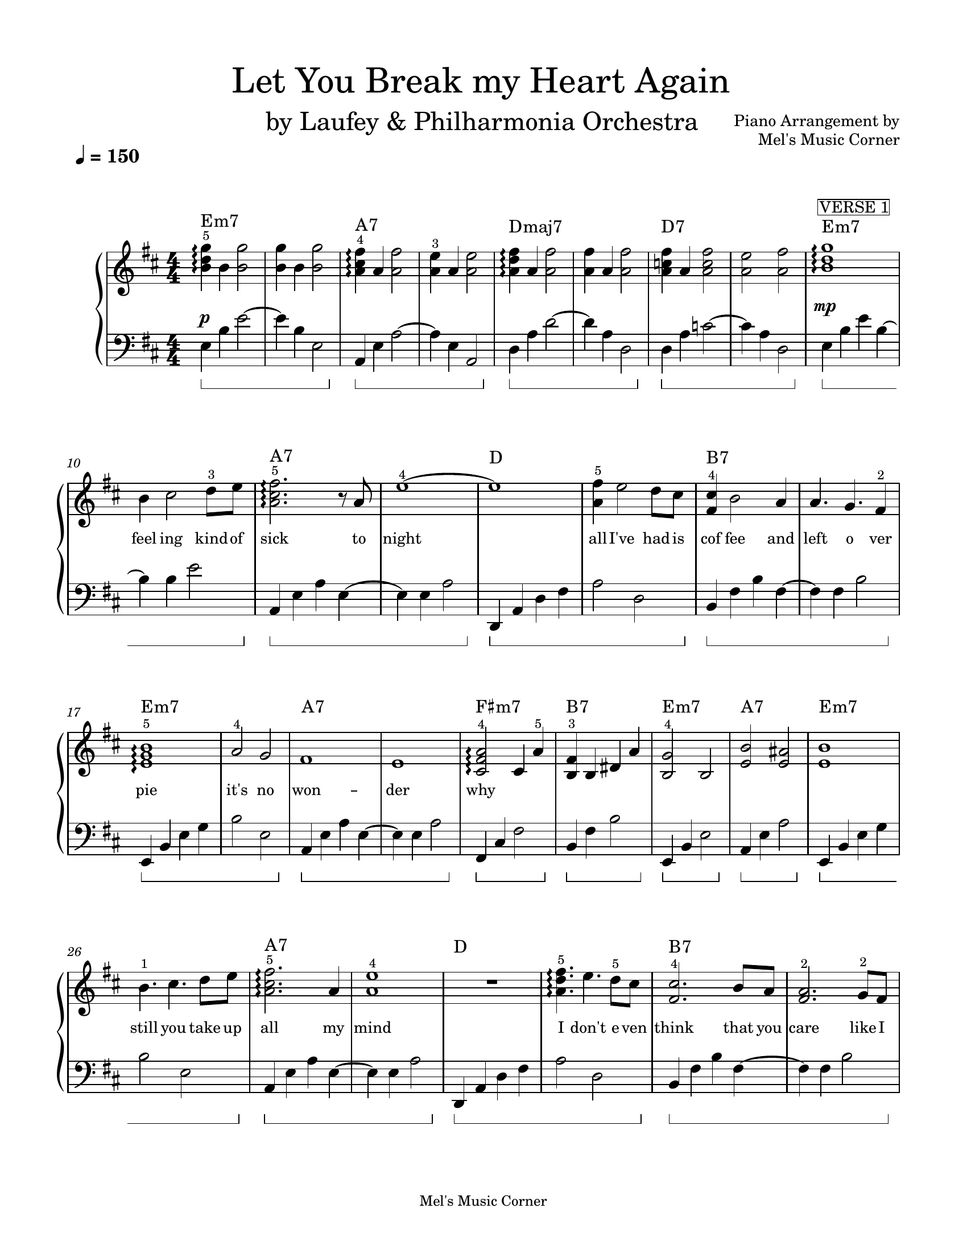 Laufey - Let You Break My Heart Again (piano sheet music) by Mel's Music Corner